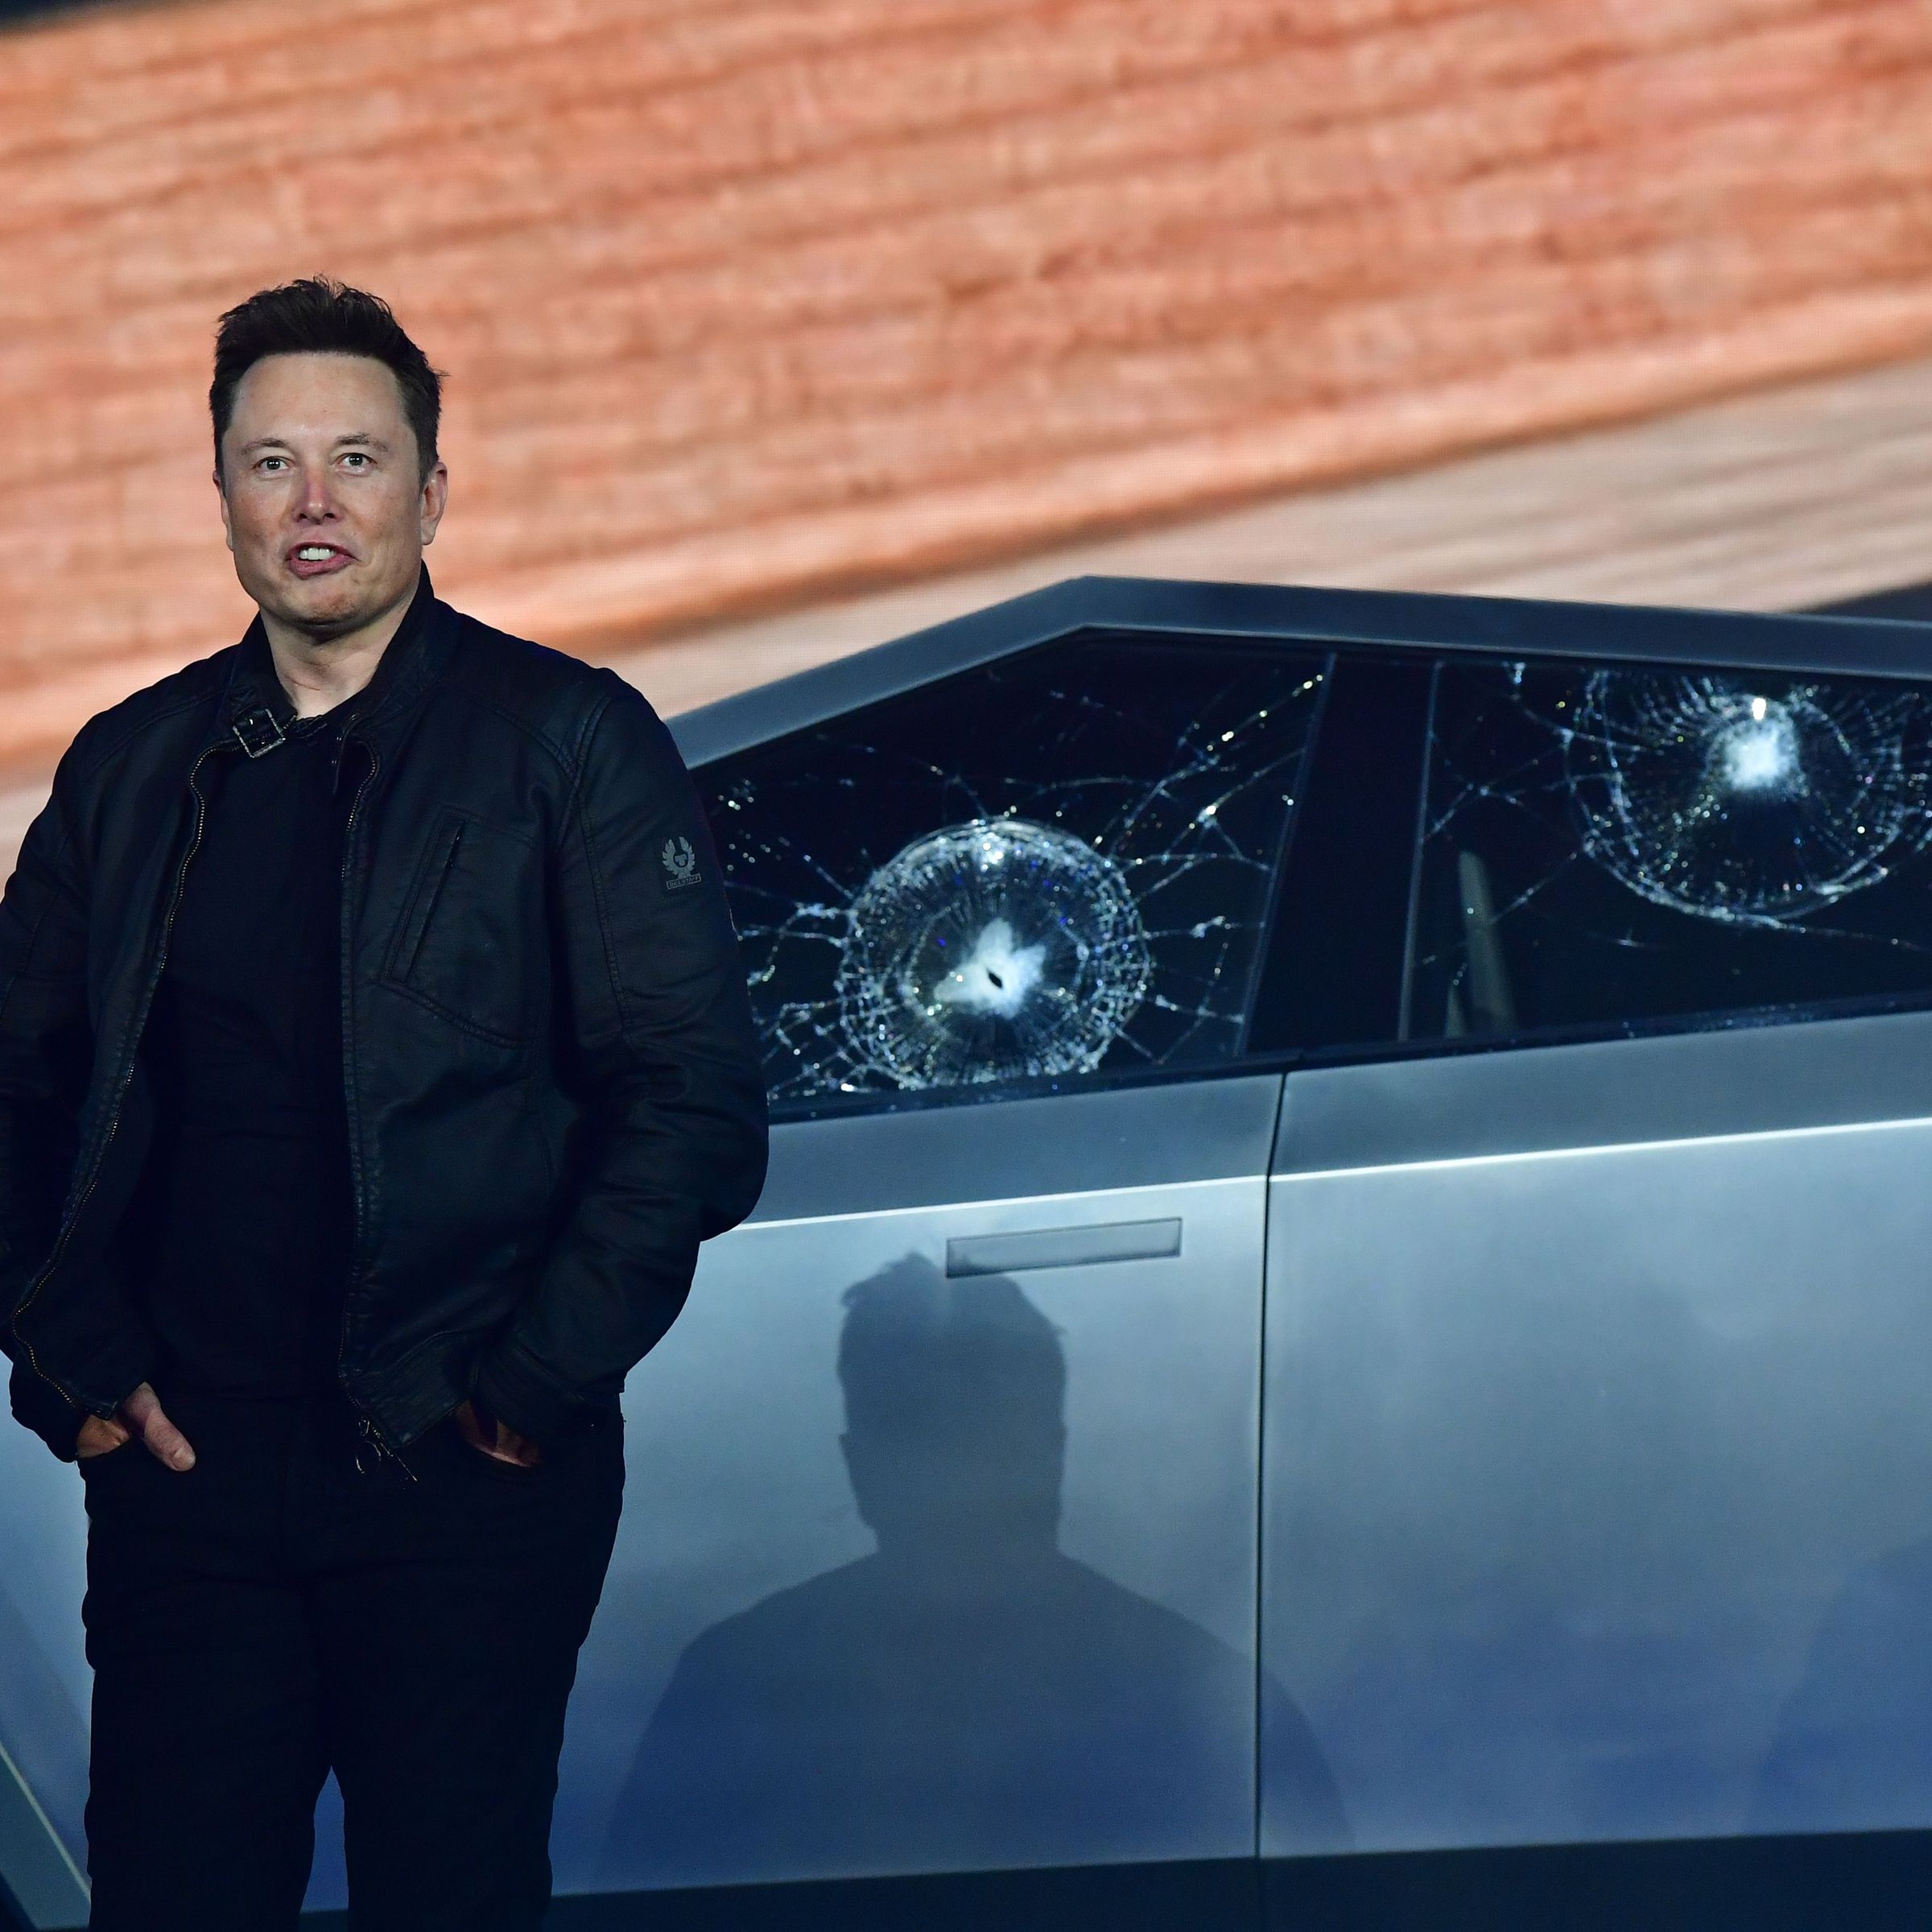 Elon Musk in front of a damaged Cybertruck